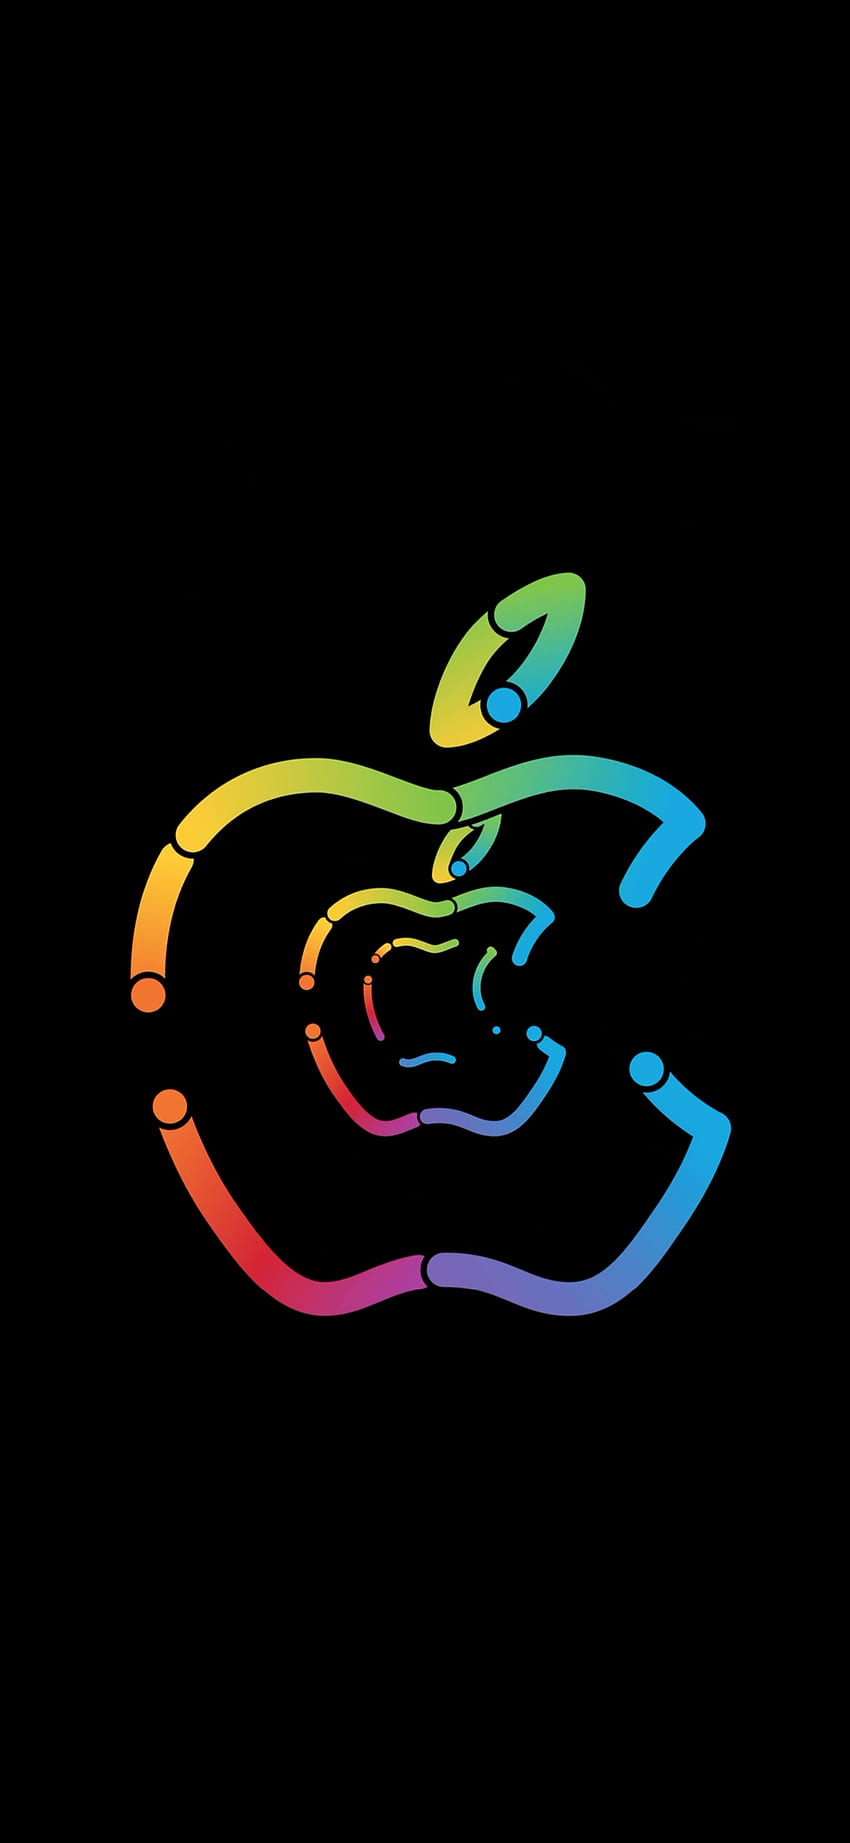 Apple Logo Animation iPhone 11 Promocional [EN VIVO] - Central fondo de pantalla del teléfono